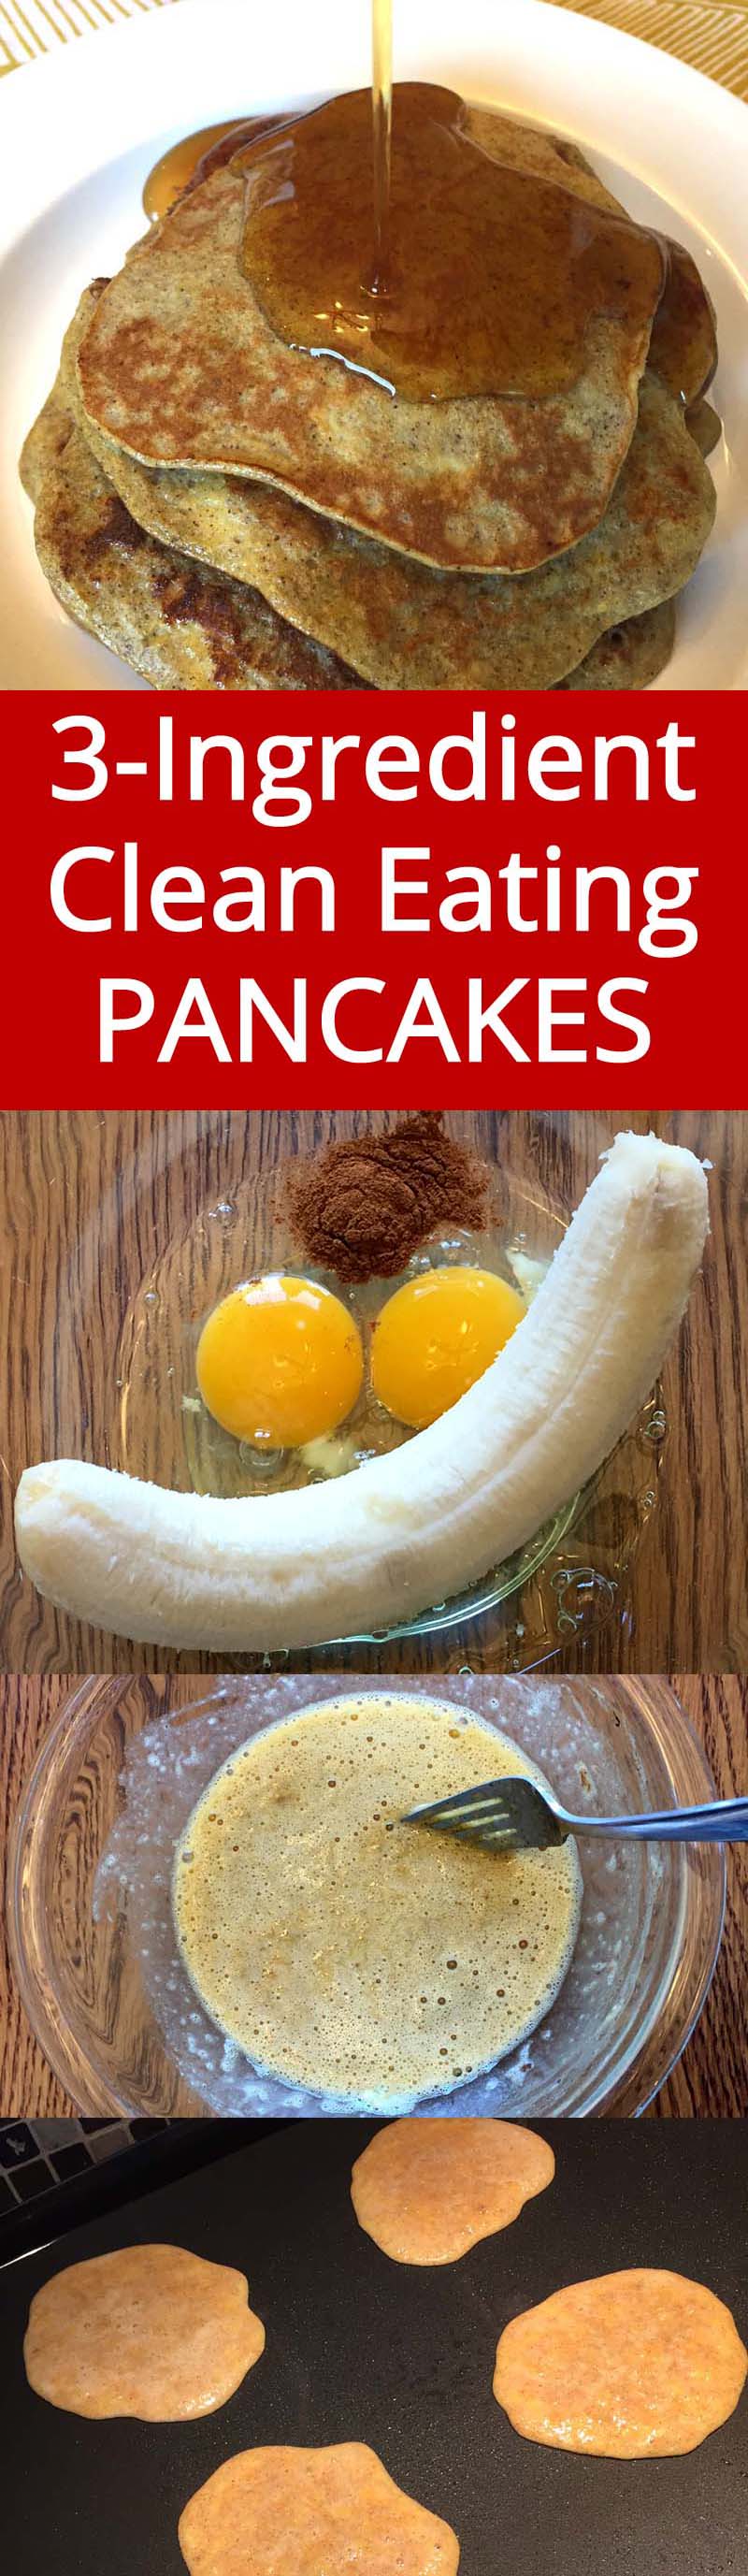 Healthy 3-Ingredient Banana Egg Pancakes - gluten-free, sugar-free, grain-free! Must try this! | MelanieCooks.com